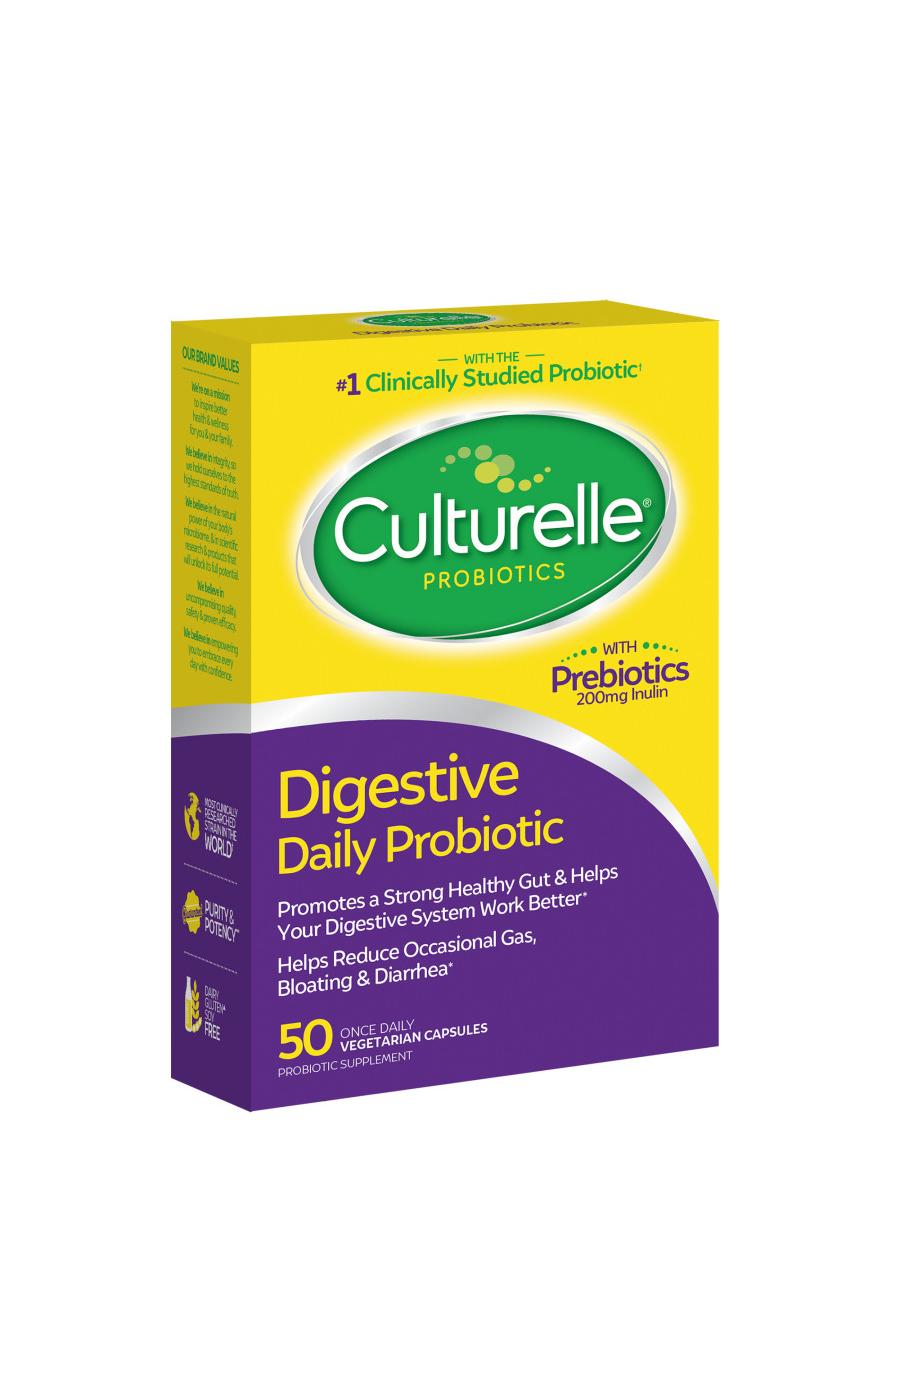 Culturelle Digestive Health Probiotic; image 1 of 2